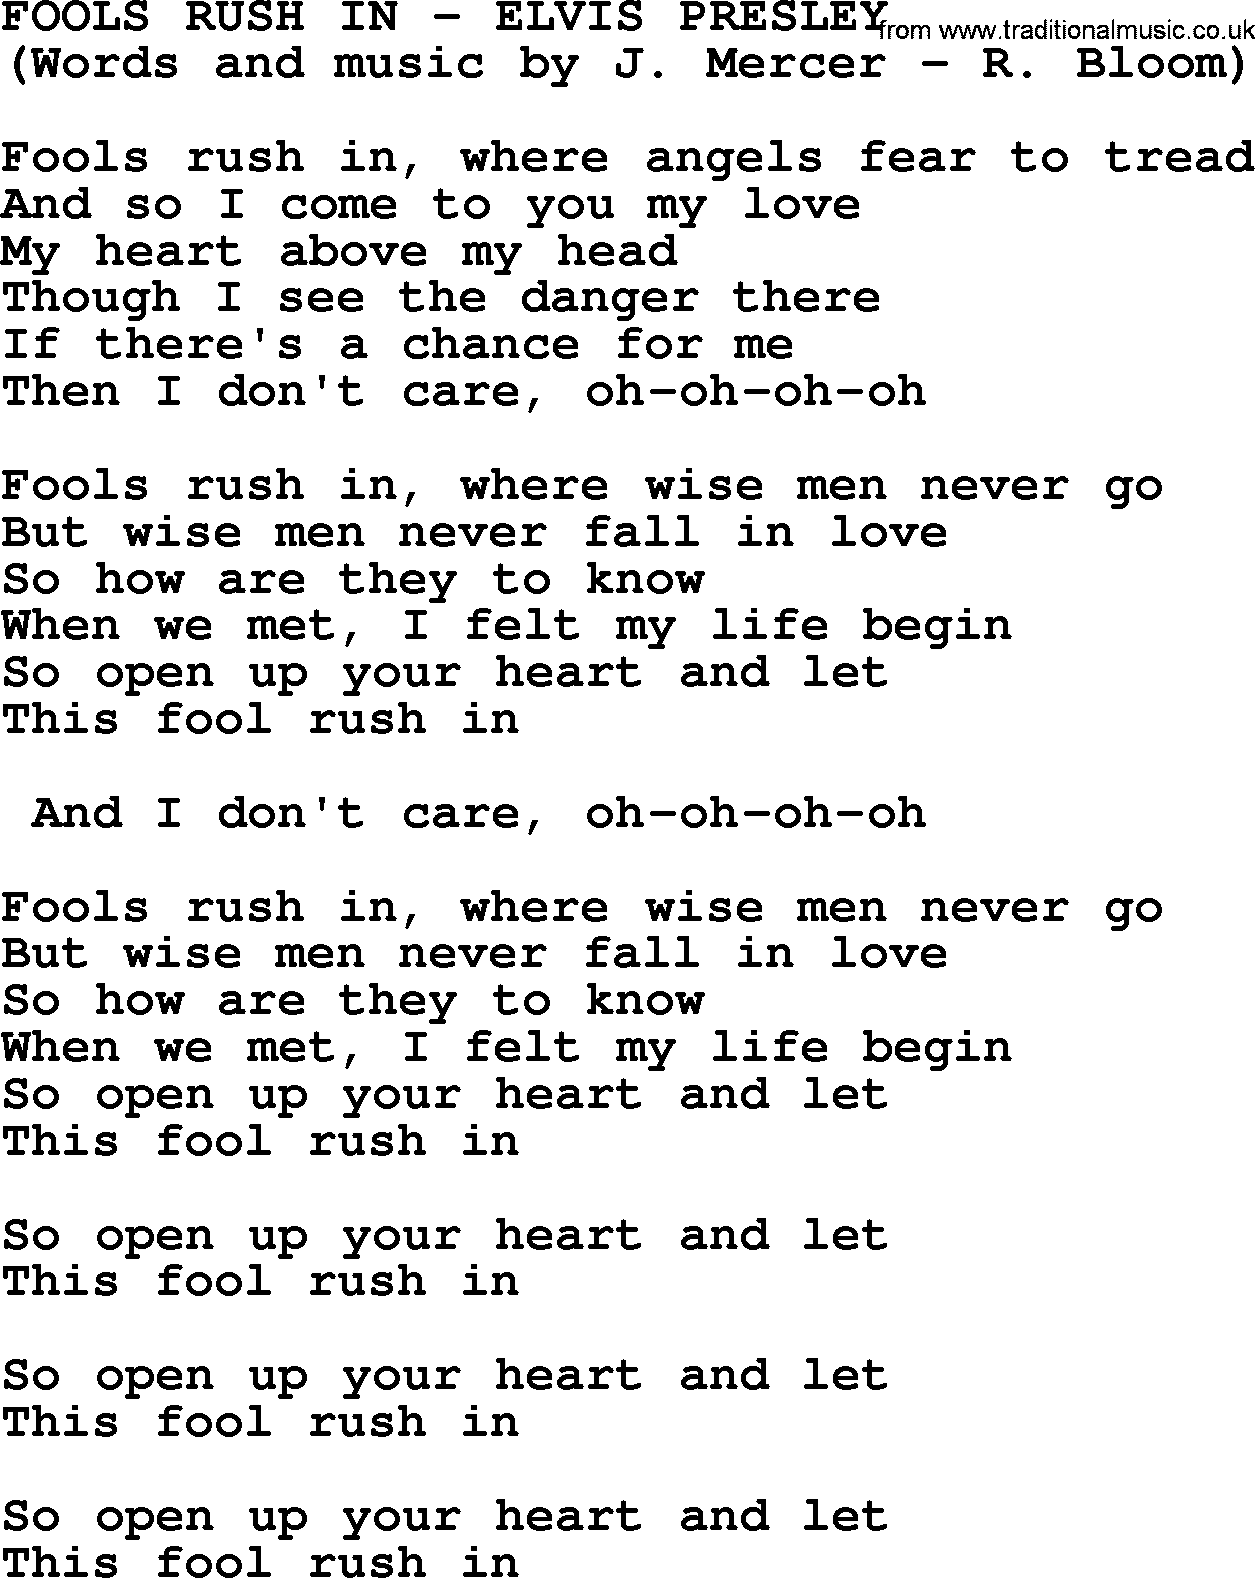 Elvis Presley song: Fools Rush In lyrics